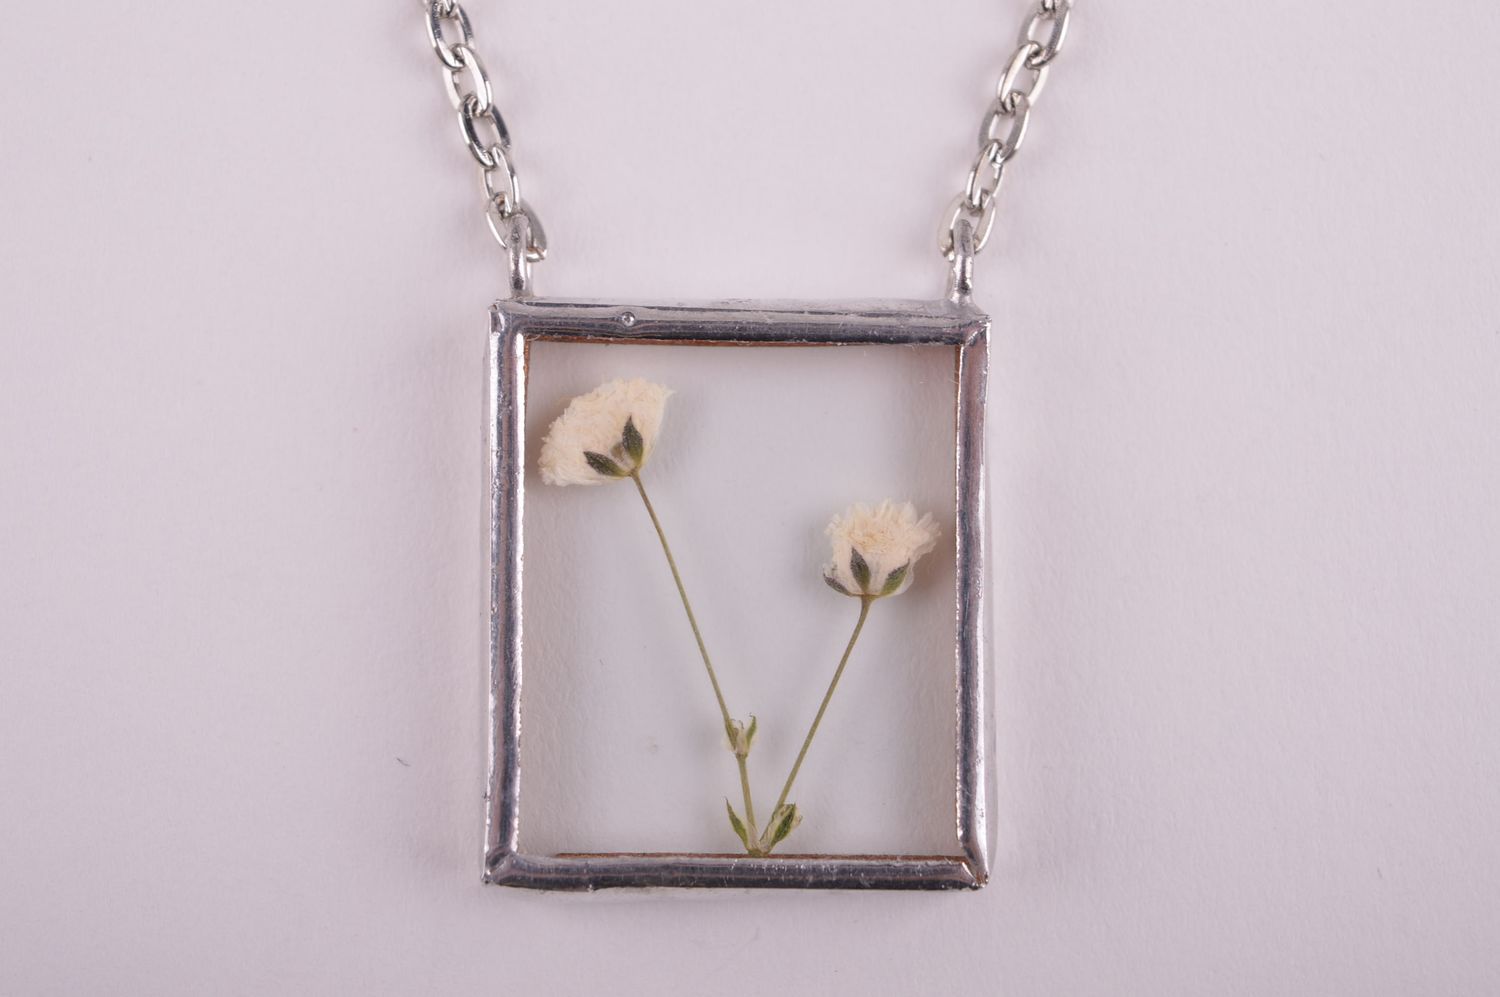 Stylish handmade neck pendant glass pendant artisan jewelry designs gift ideas photo 3